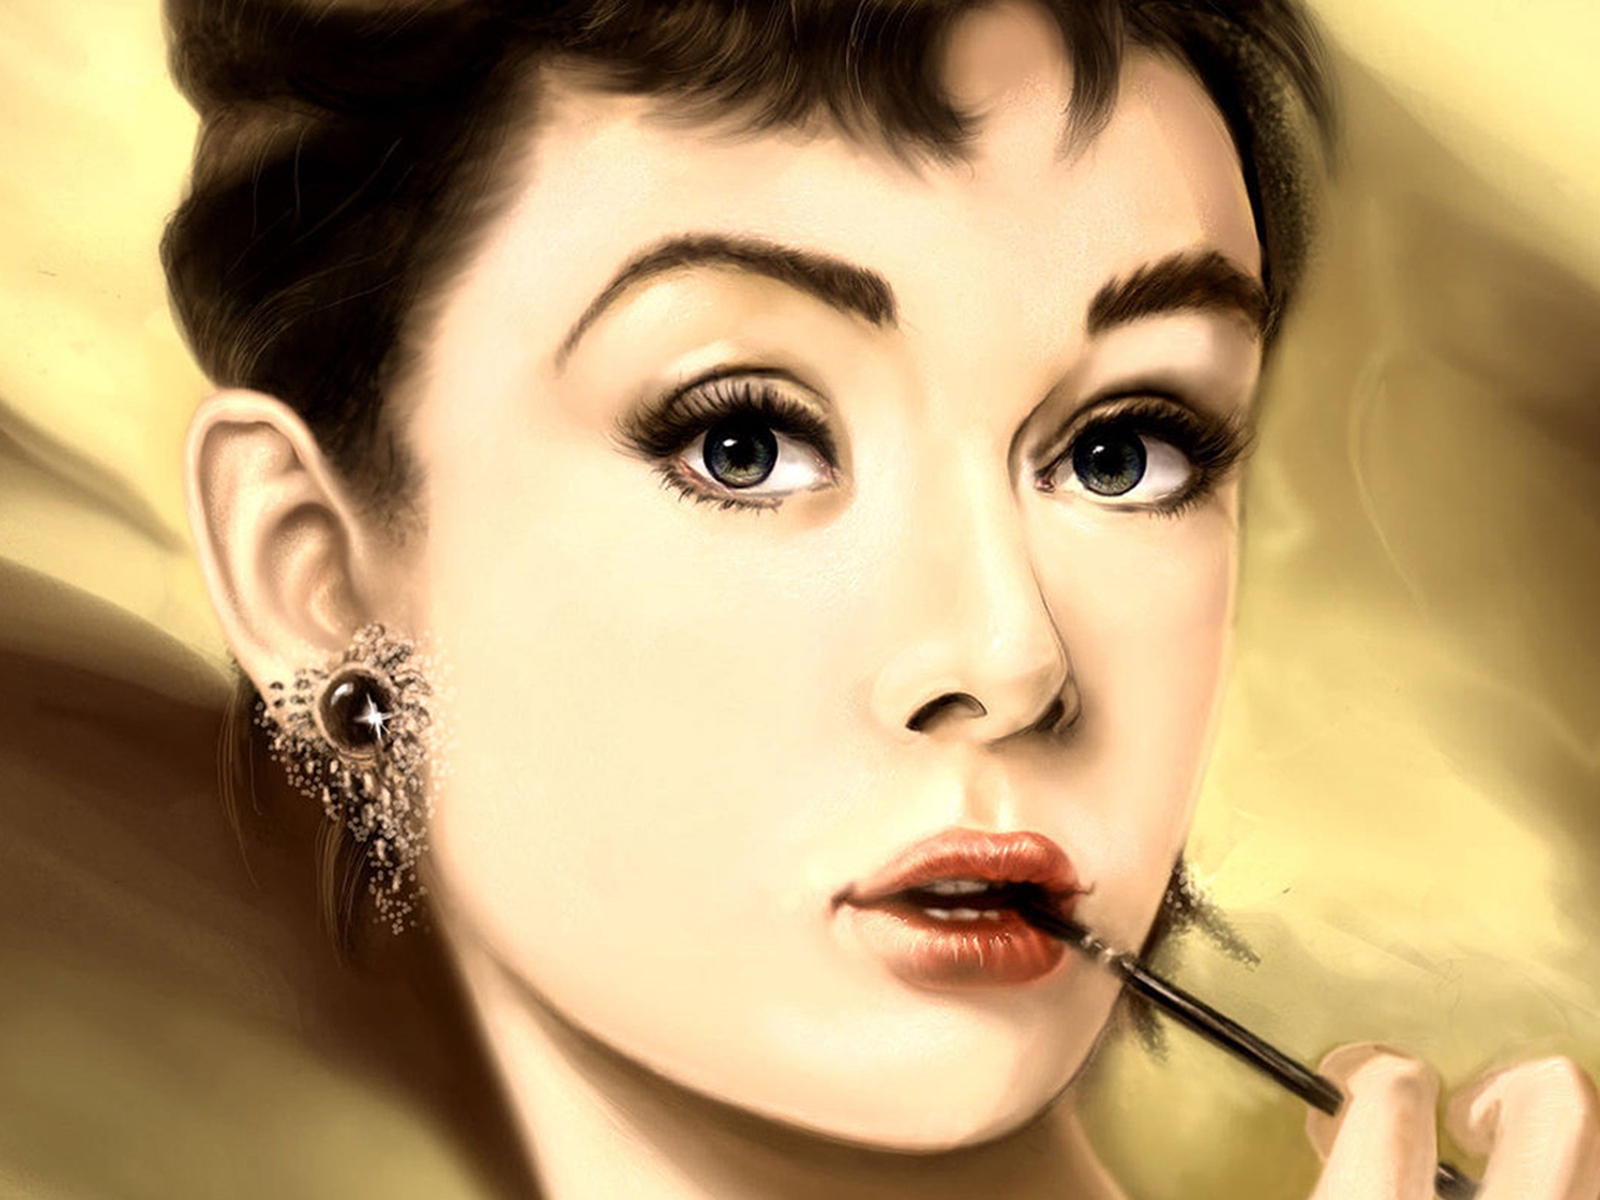 Audrey Hepburn Portrait Painting for 1600 x 1200 resolution